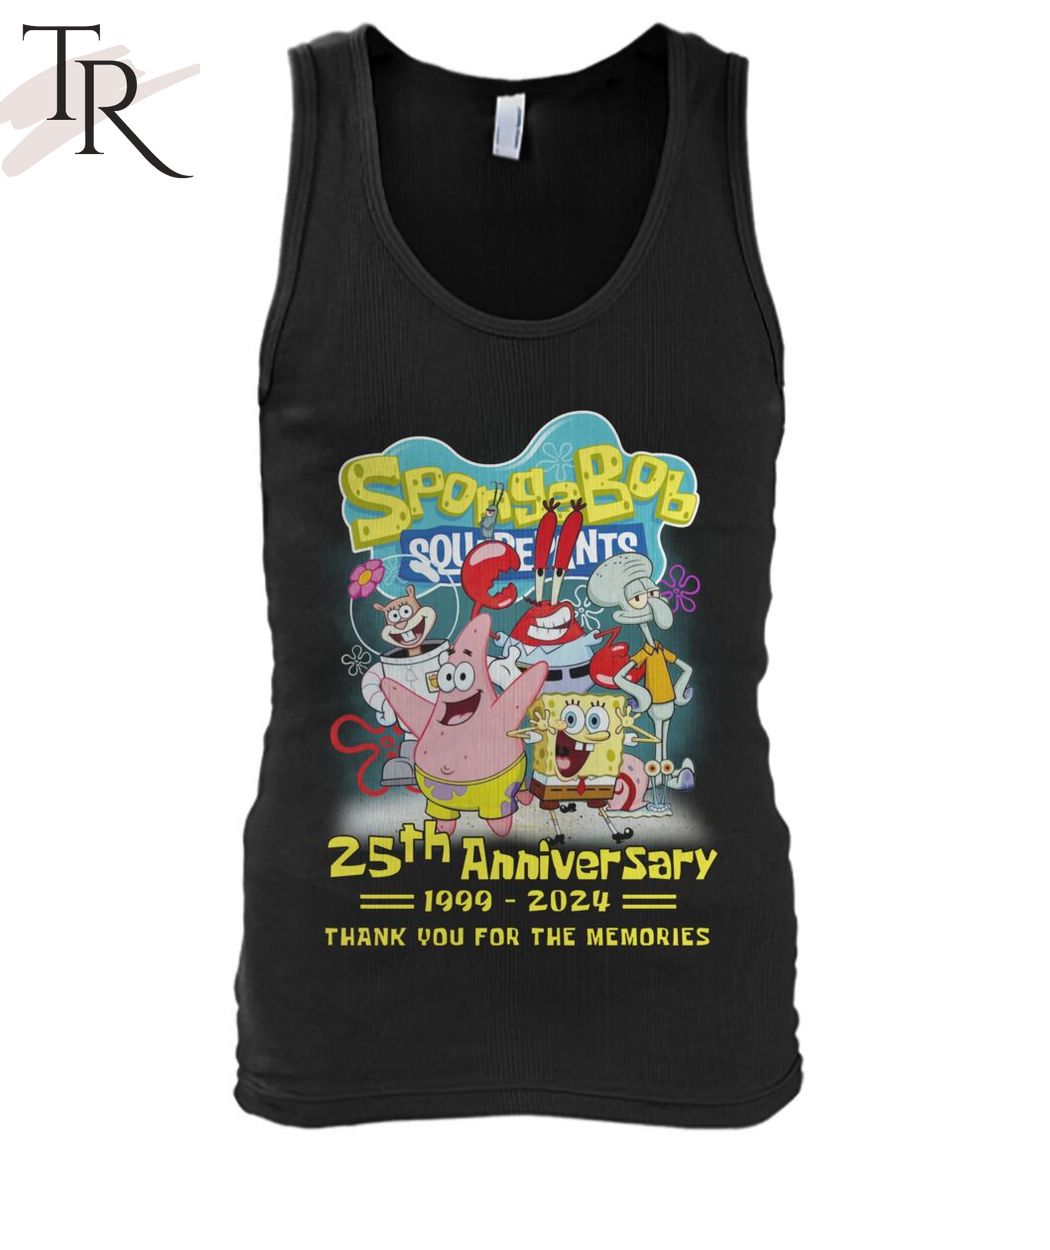 SpongeBob SquarePants 25th Anniversary 1999-2024 Thank You For The Memories T-Shirt